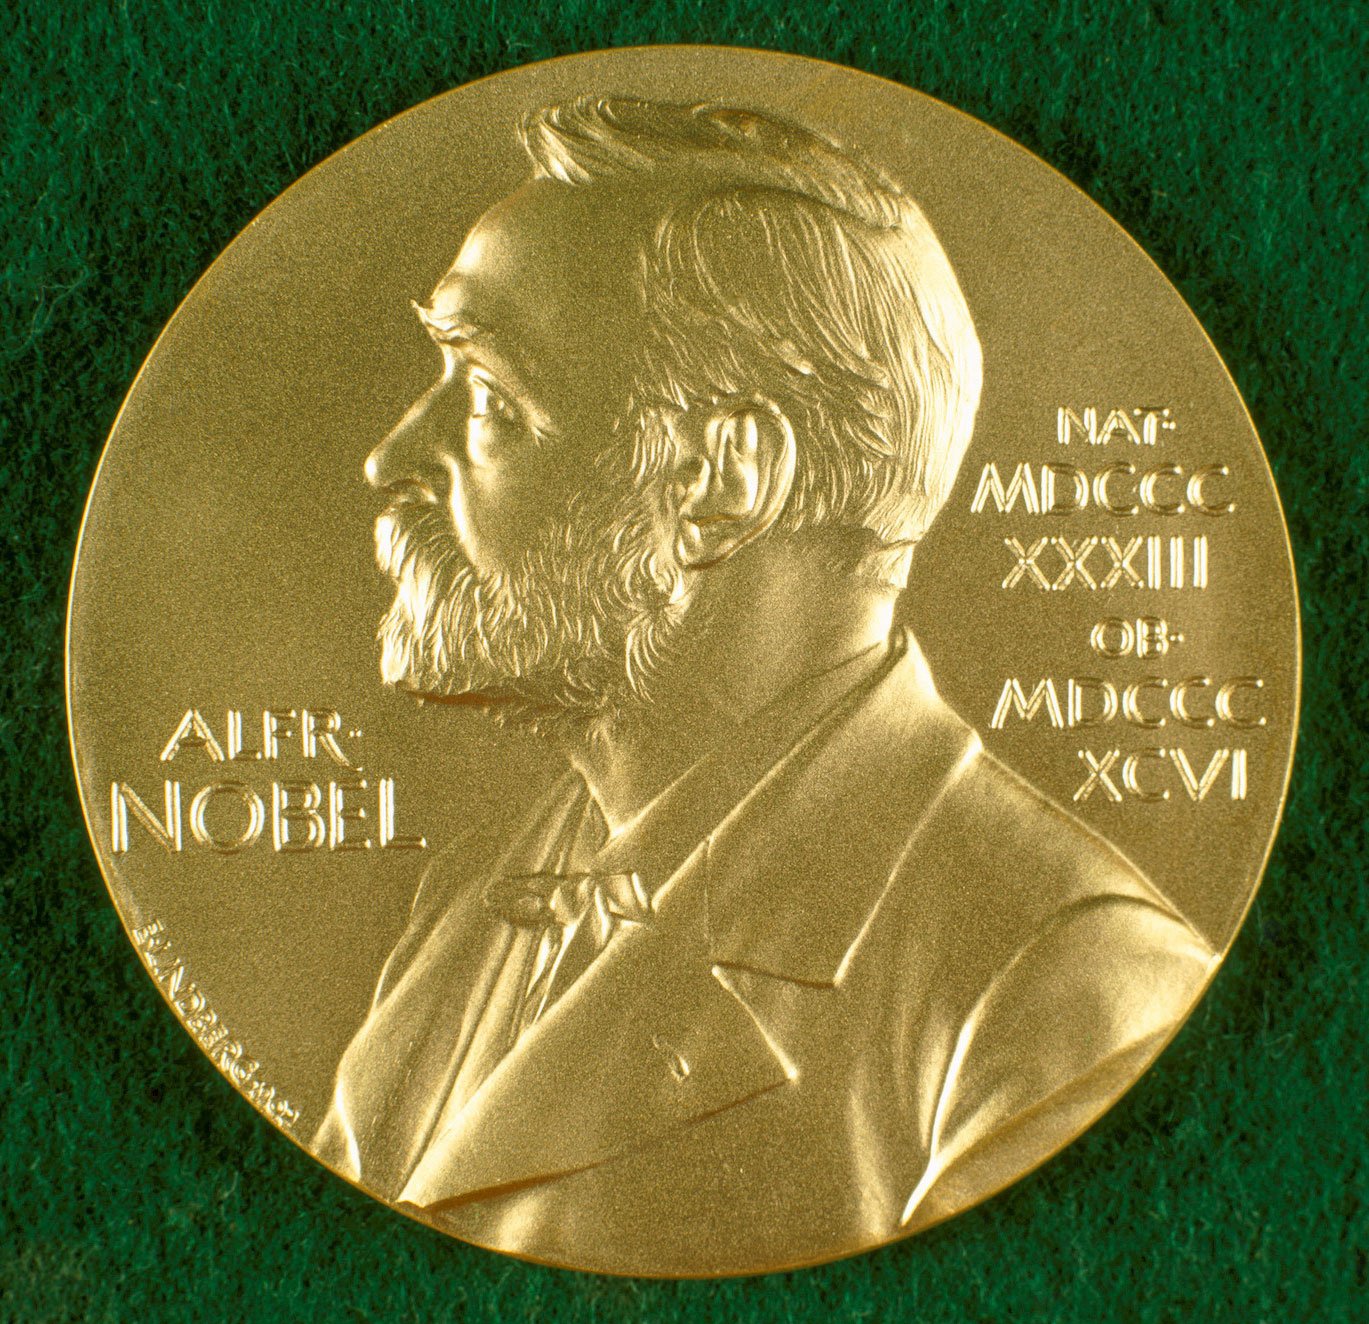 Nobel Prize Feature